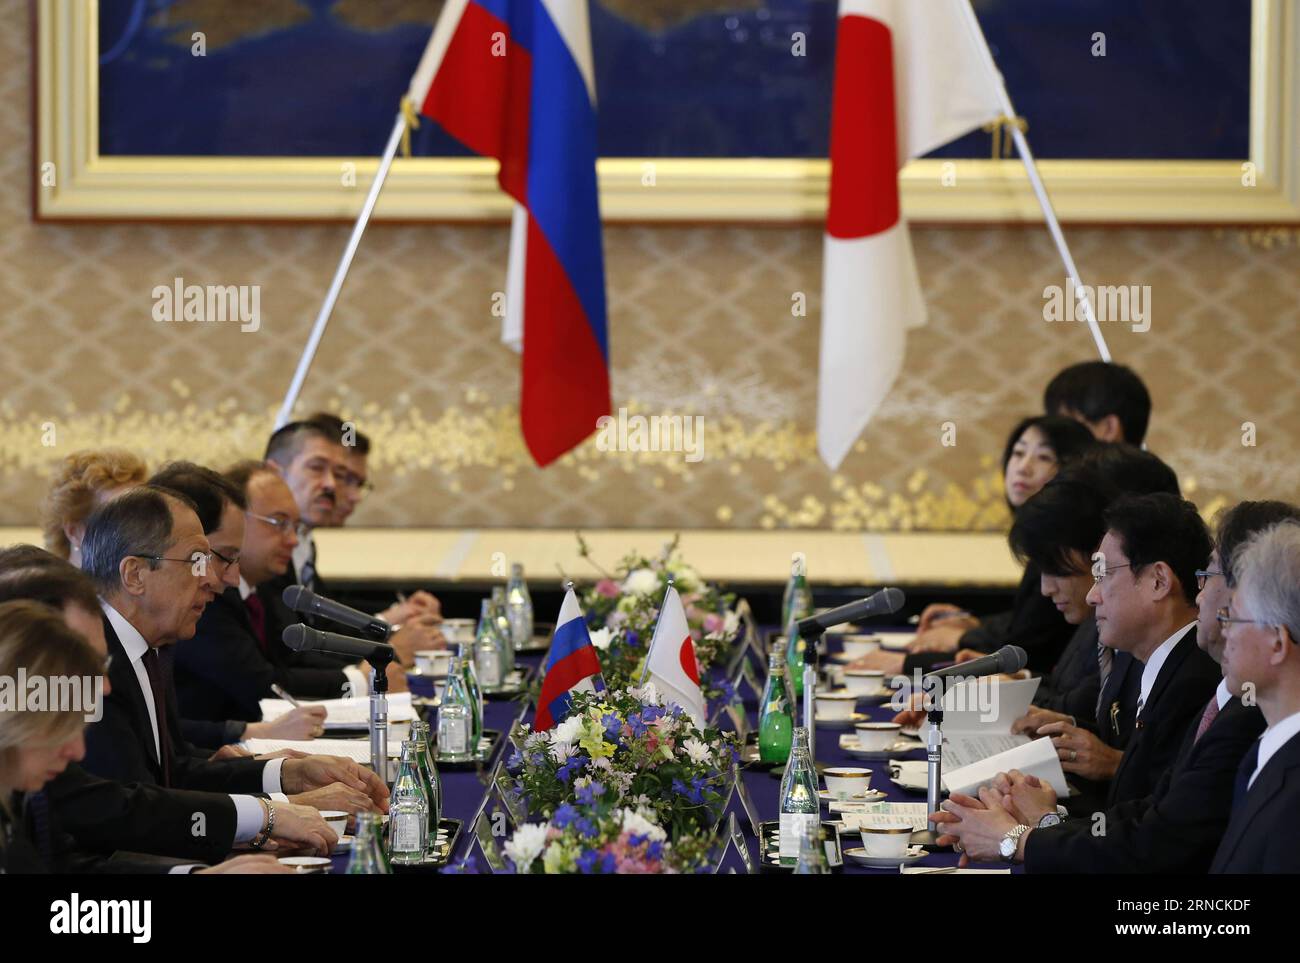 Sergej Lawrow empfängt japanischen Amtskollegen Fumio Kishida (160415) -- TOKYO, 15 aprile 2016 () --il ministro degli Esteri giapponese Fumio Kishida (3° R) e il ministro degli Esteri russo in visita Sergey Lavrov (3° L) partecipano a una riunione a Tokyo, in Giappone, 15 aprile 2016. () RIUNIONE DEI MINISTRI DEGLI ESTERI GIAPPONE-RUSSIA Xinhua PUBLICATIONxNOTxINxCHN Sergei Lavrov riceve le controparti giapponesi Fumio Kishida 160415 Tokyo 15 aprile 2016 i Ministri degli Esteri giapponesi Fumio Kishida 3rd r e i Ministri degli Esteri russi in visita Sergey Lavrov 3rd l partecipano a una riunione a Tokyo Giappone 15 aprile 2016 Ministro degli Esteri Giappone Russia Foto Stock